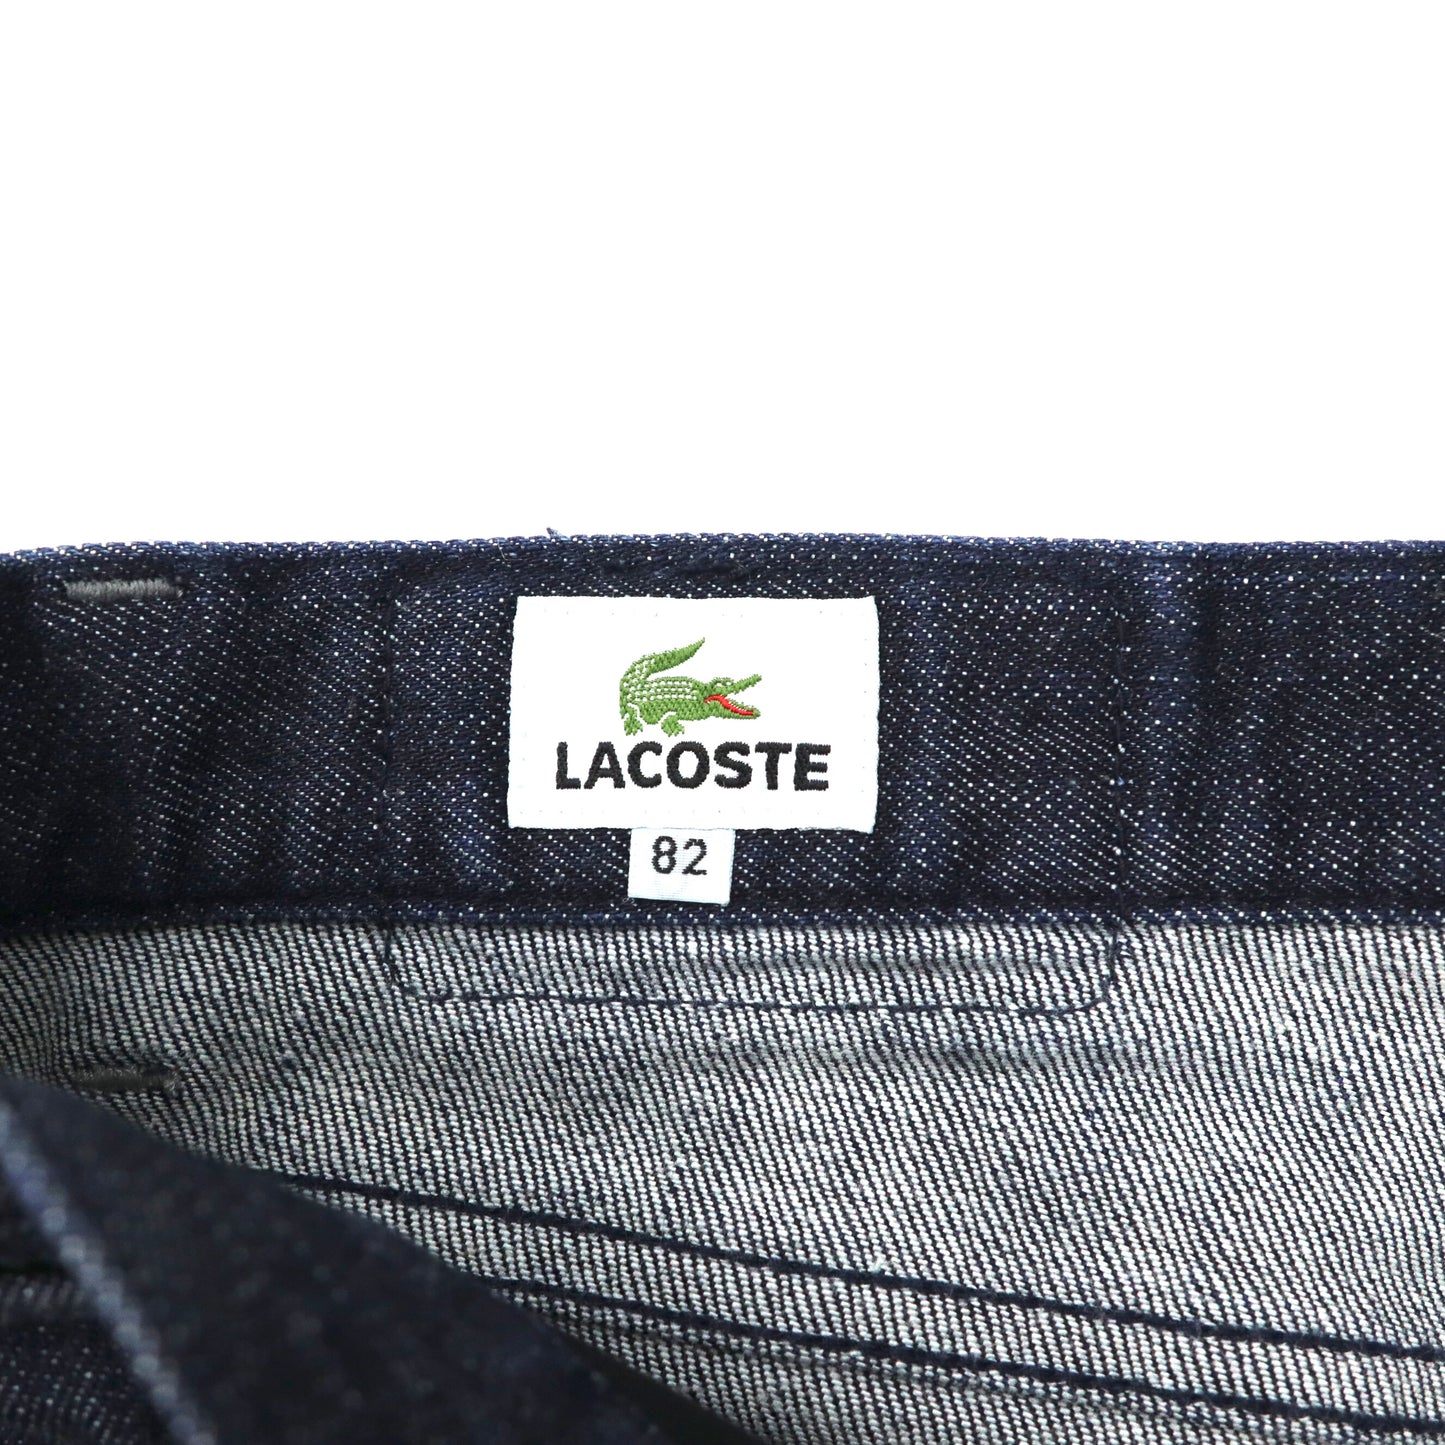 LACOSTE ストレートデニムパンツ 82 ブルー 濃紺 日本製